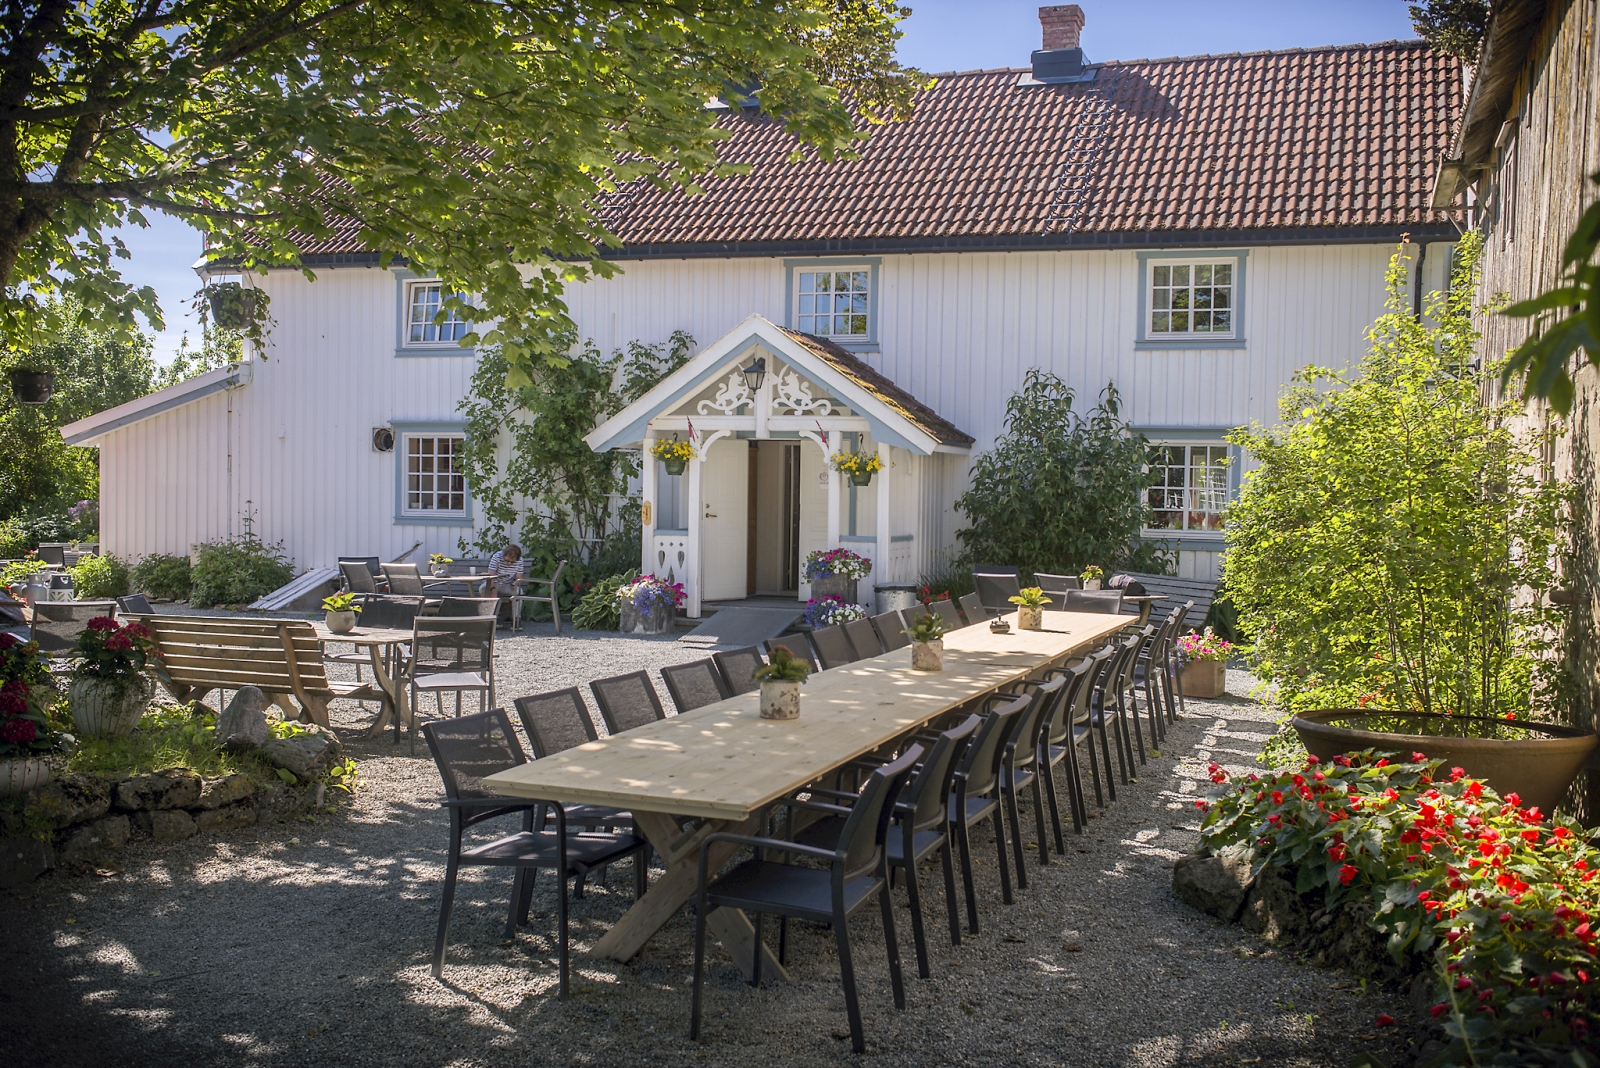 Outdoor dining in Norway